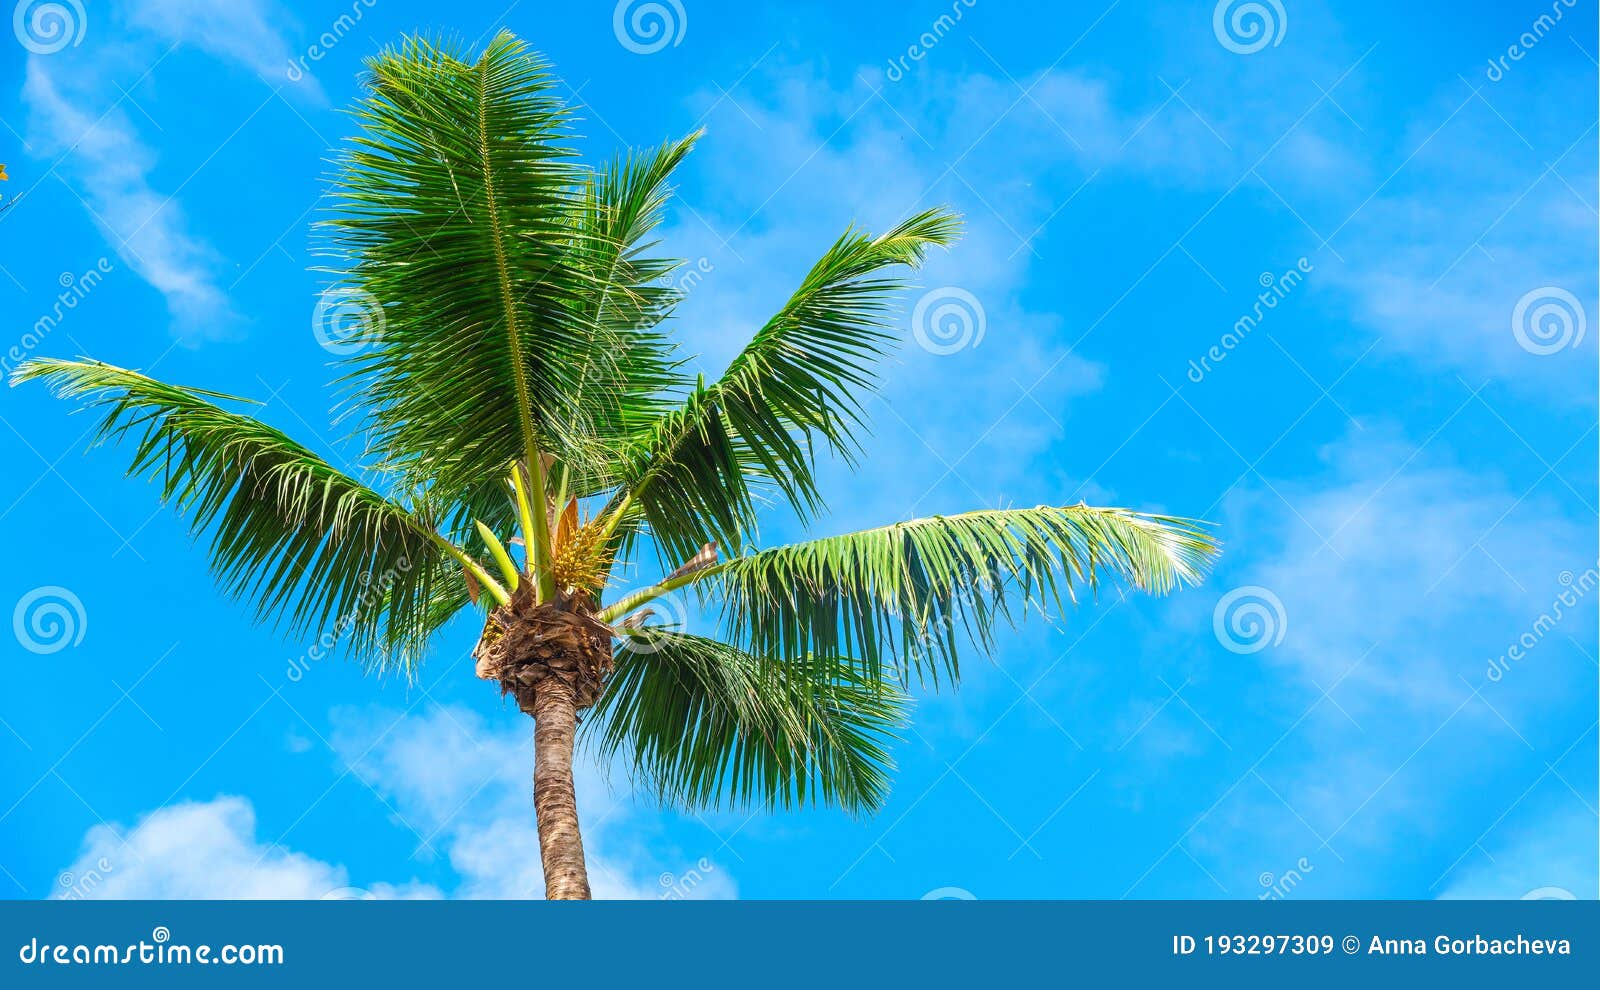 tropical palm tren against sky